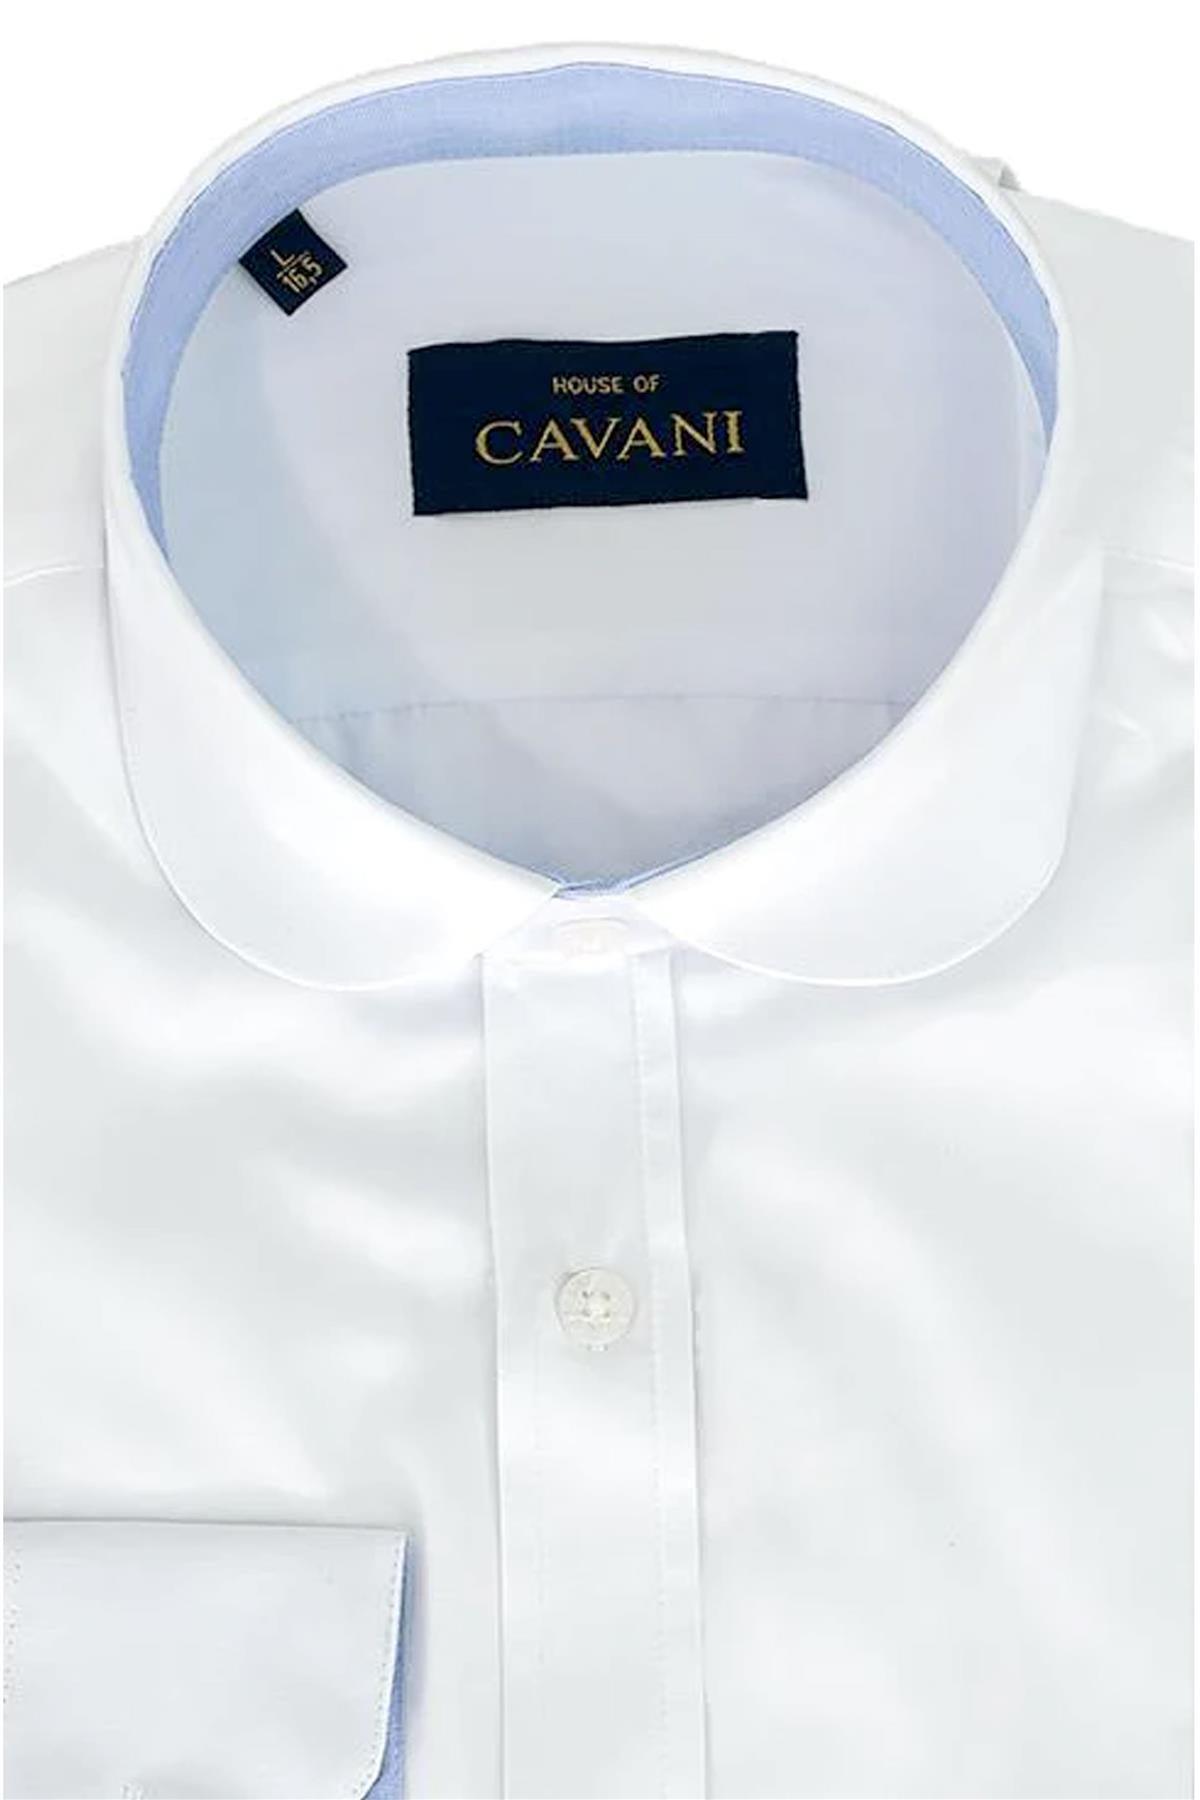 Shirt No. 635 White Round Neck Collar Front